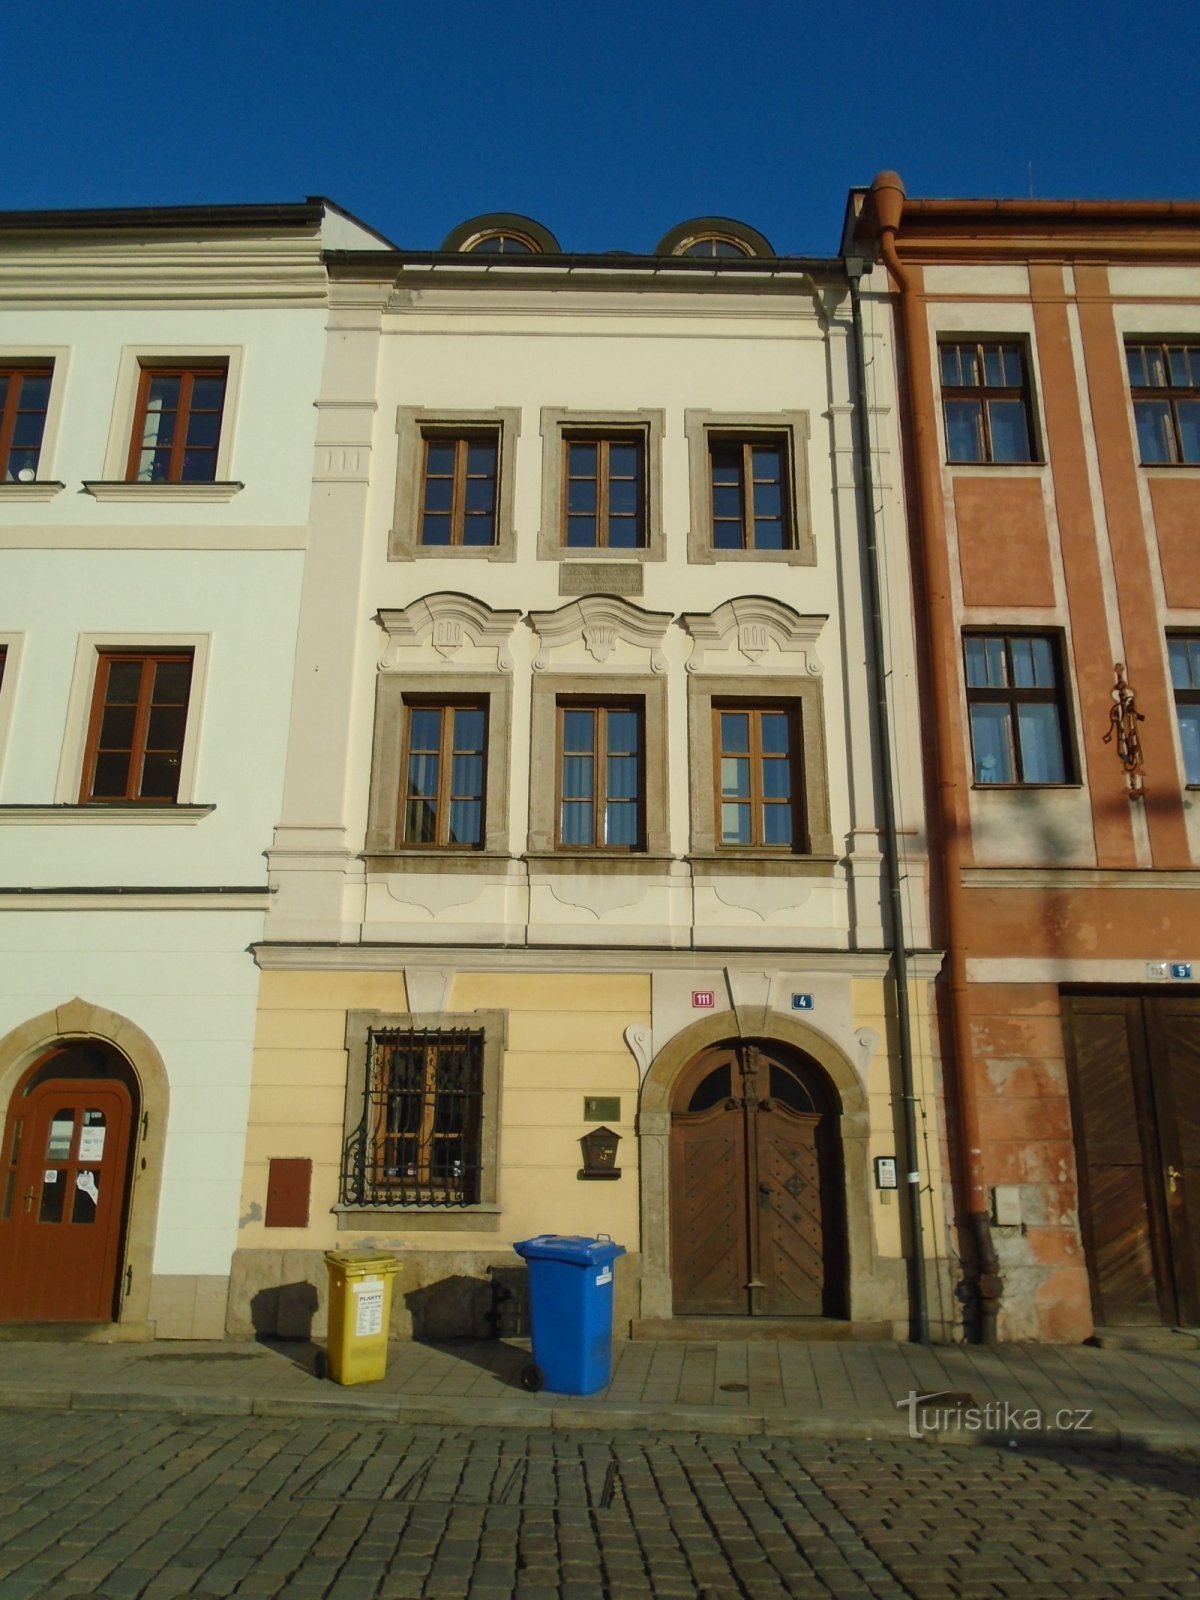 Malé náměstí số 111 (Hradec Králové, ngày 30.1.2019 tháng XNUMX năm XNUMX)